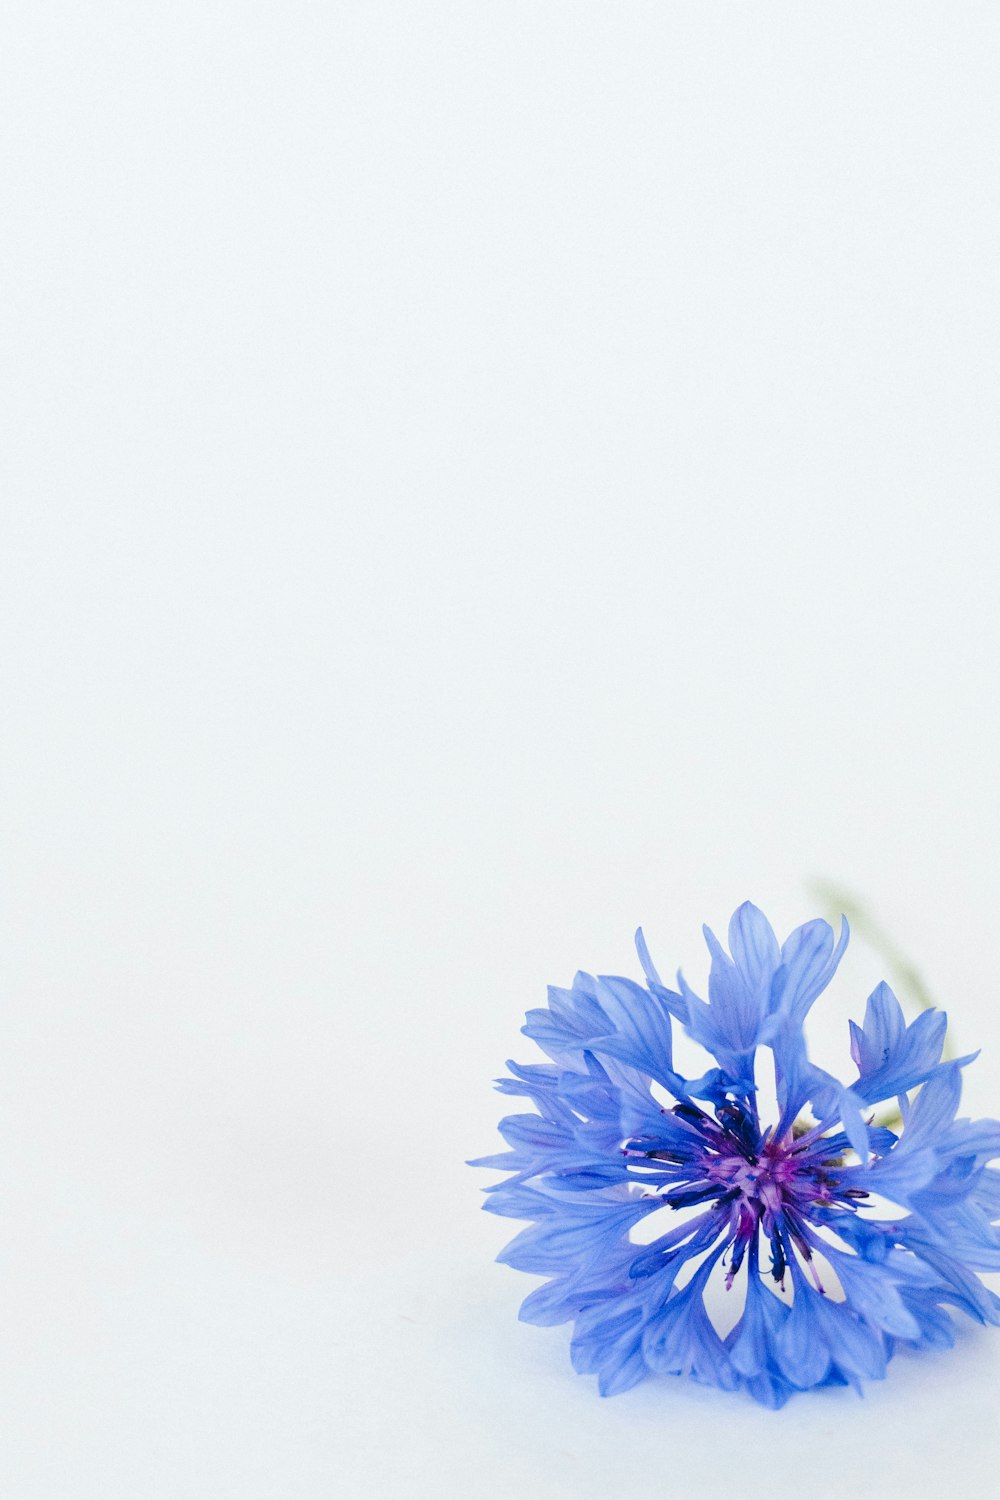 500+ Blue Flower Pictures [HD] | Download Free Images on Unsplash